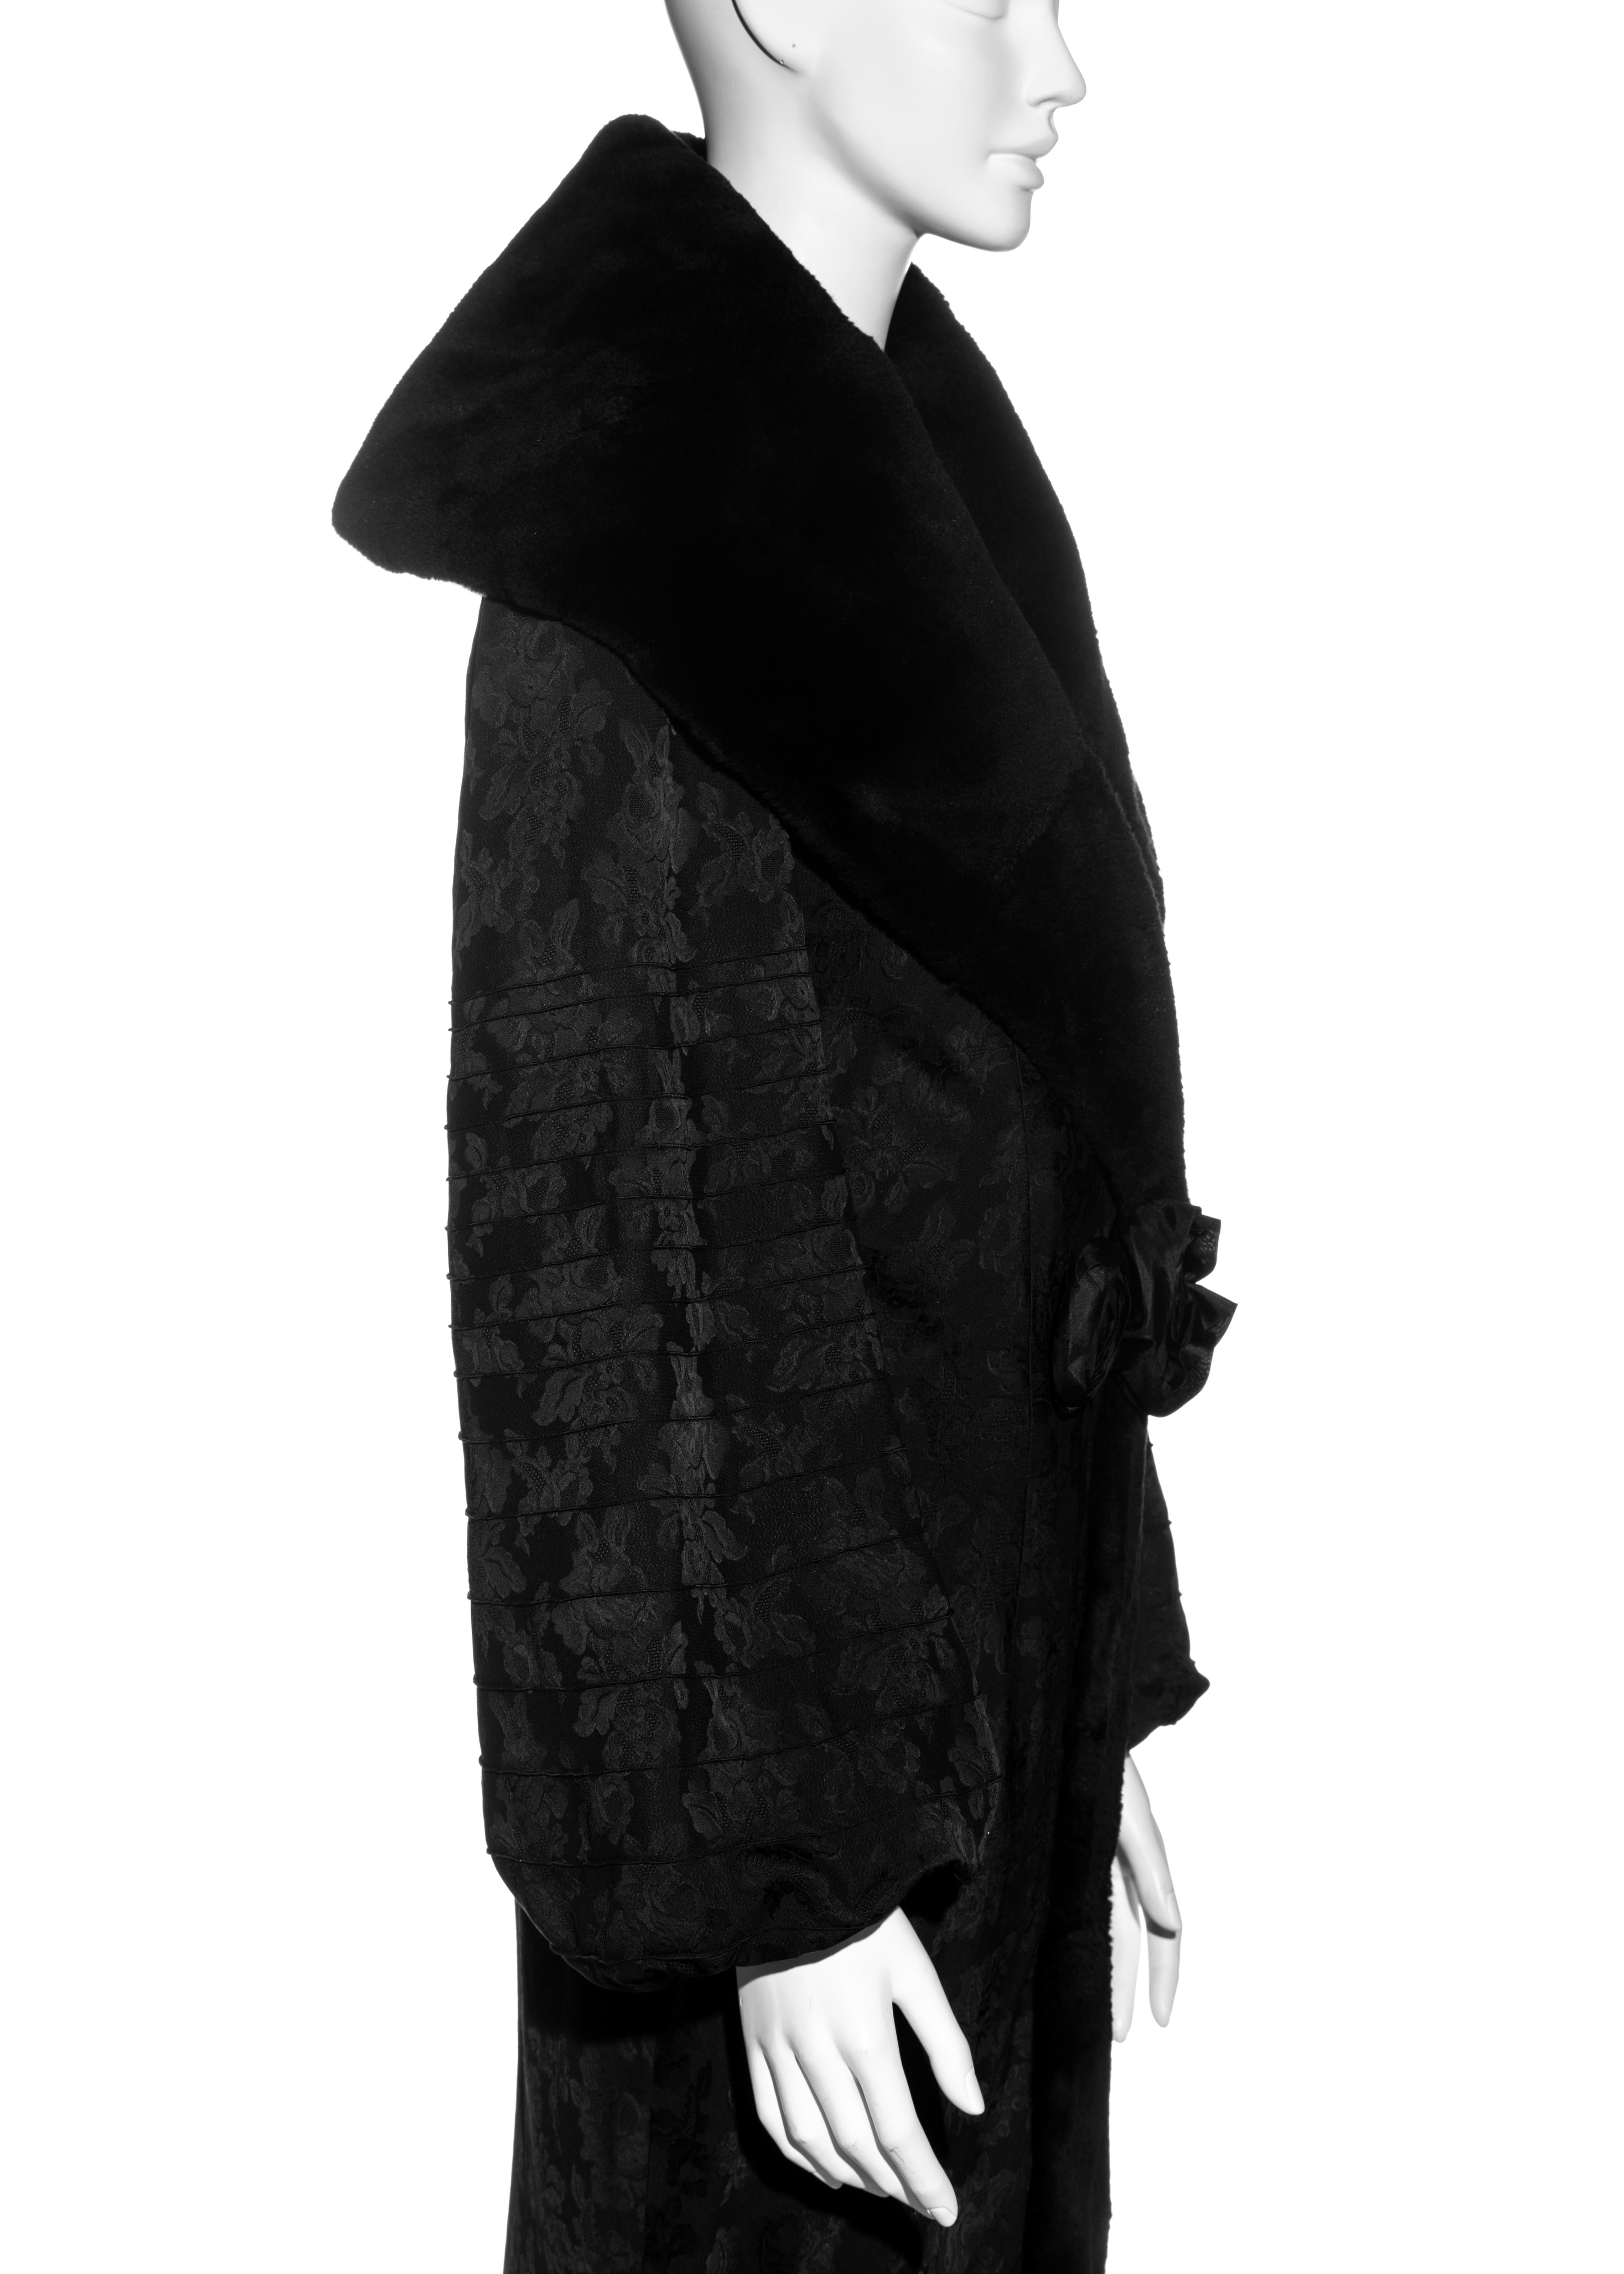 Christian Dior black jacquard evening fur coat and maxi dress, fw 1998 1